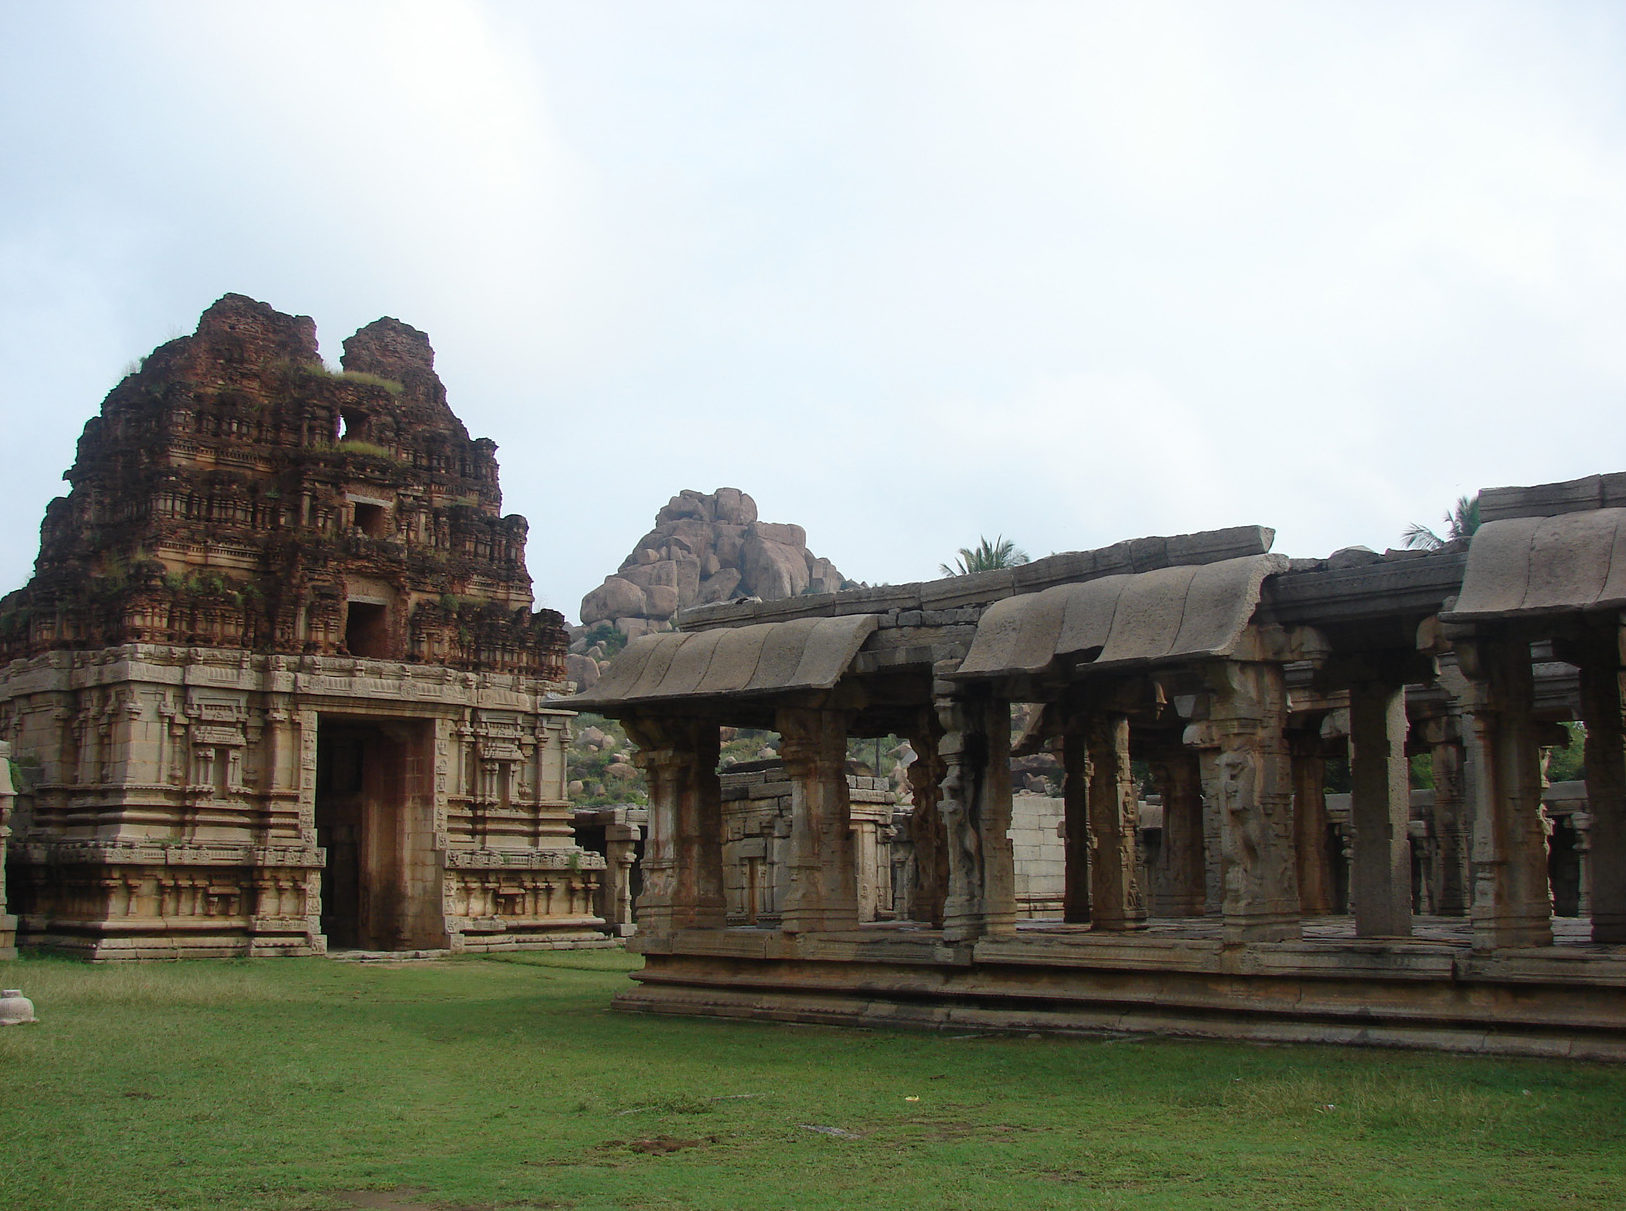 Northern gopura of the inner courtyard - Achutaraya temple complex